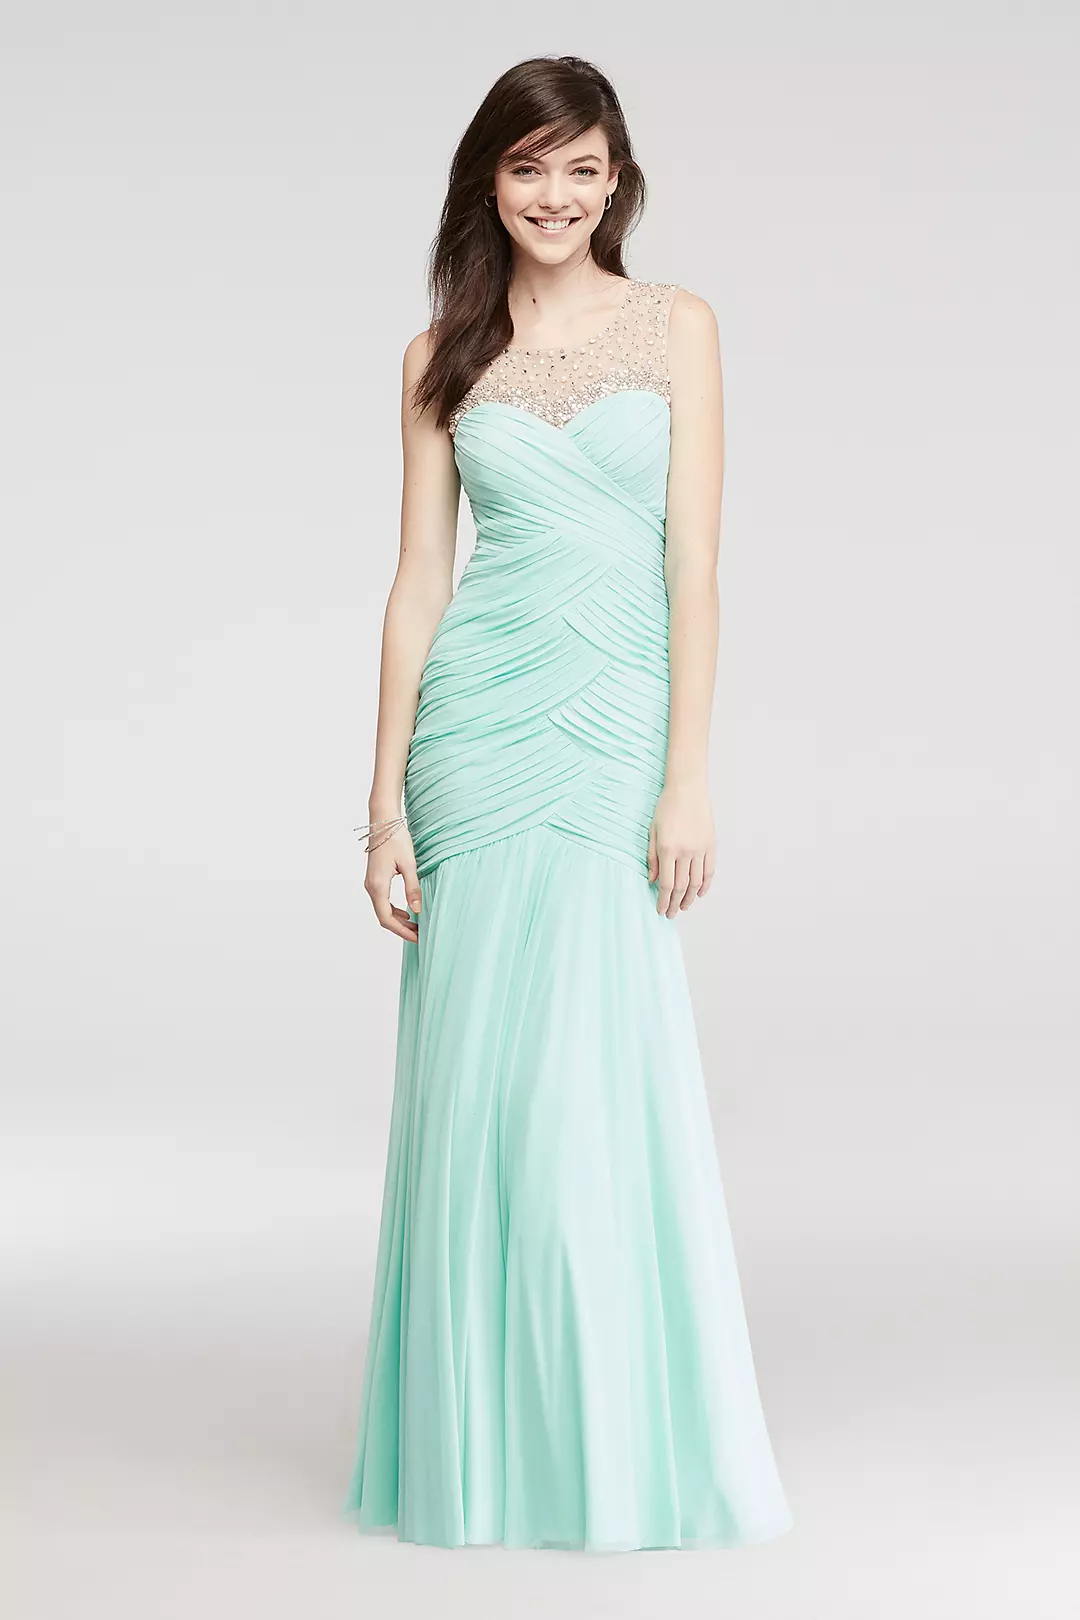 Mermaid Prom Dress with Beaded Illusion Tank Image